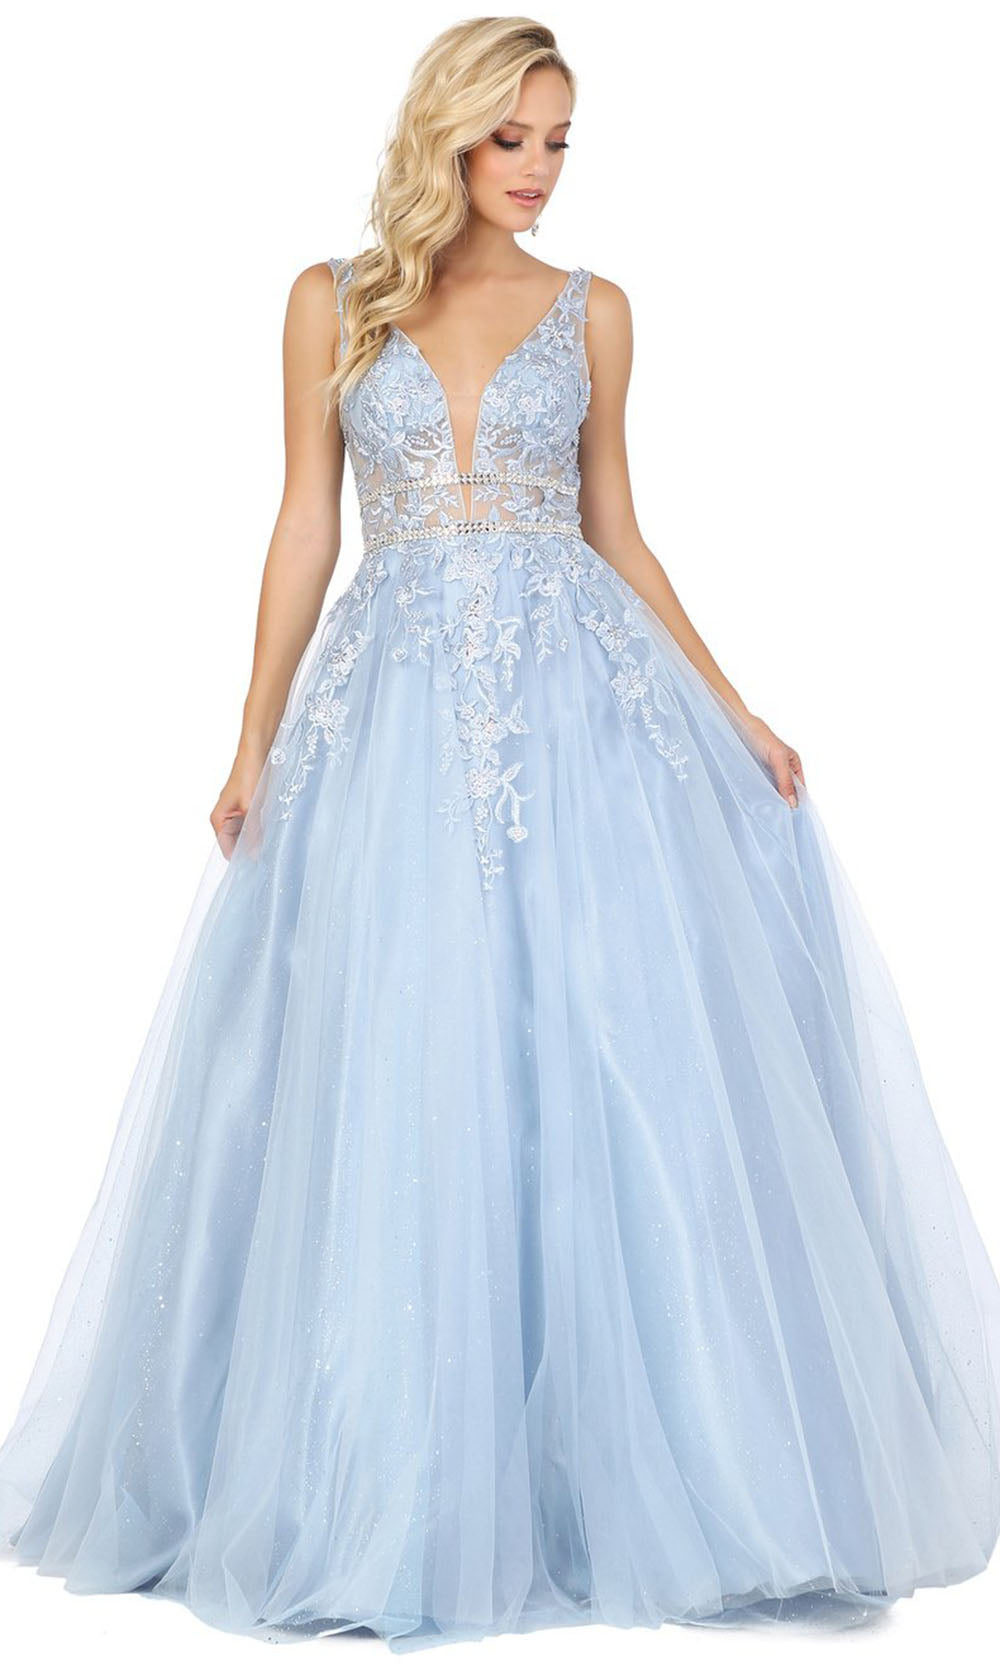 Dancing Queen - 4041 Lace Applique Double Circlet Ballgown In Blue